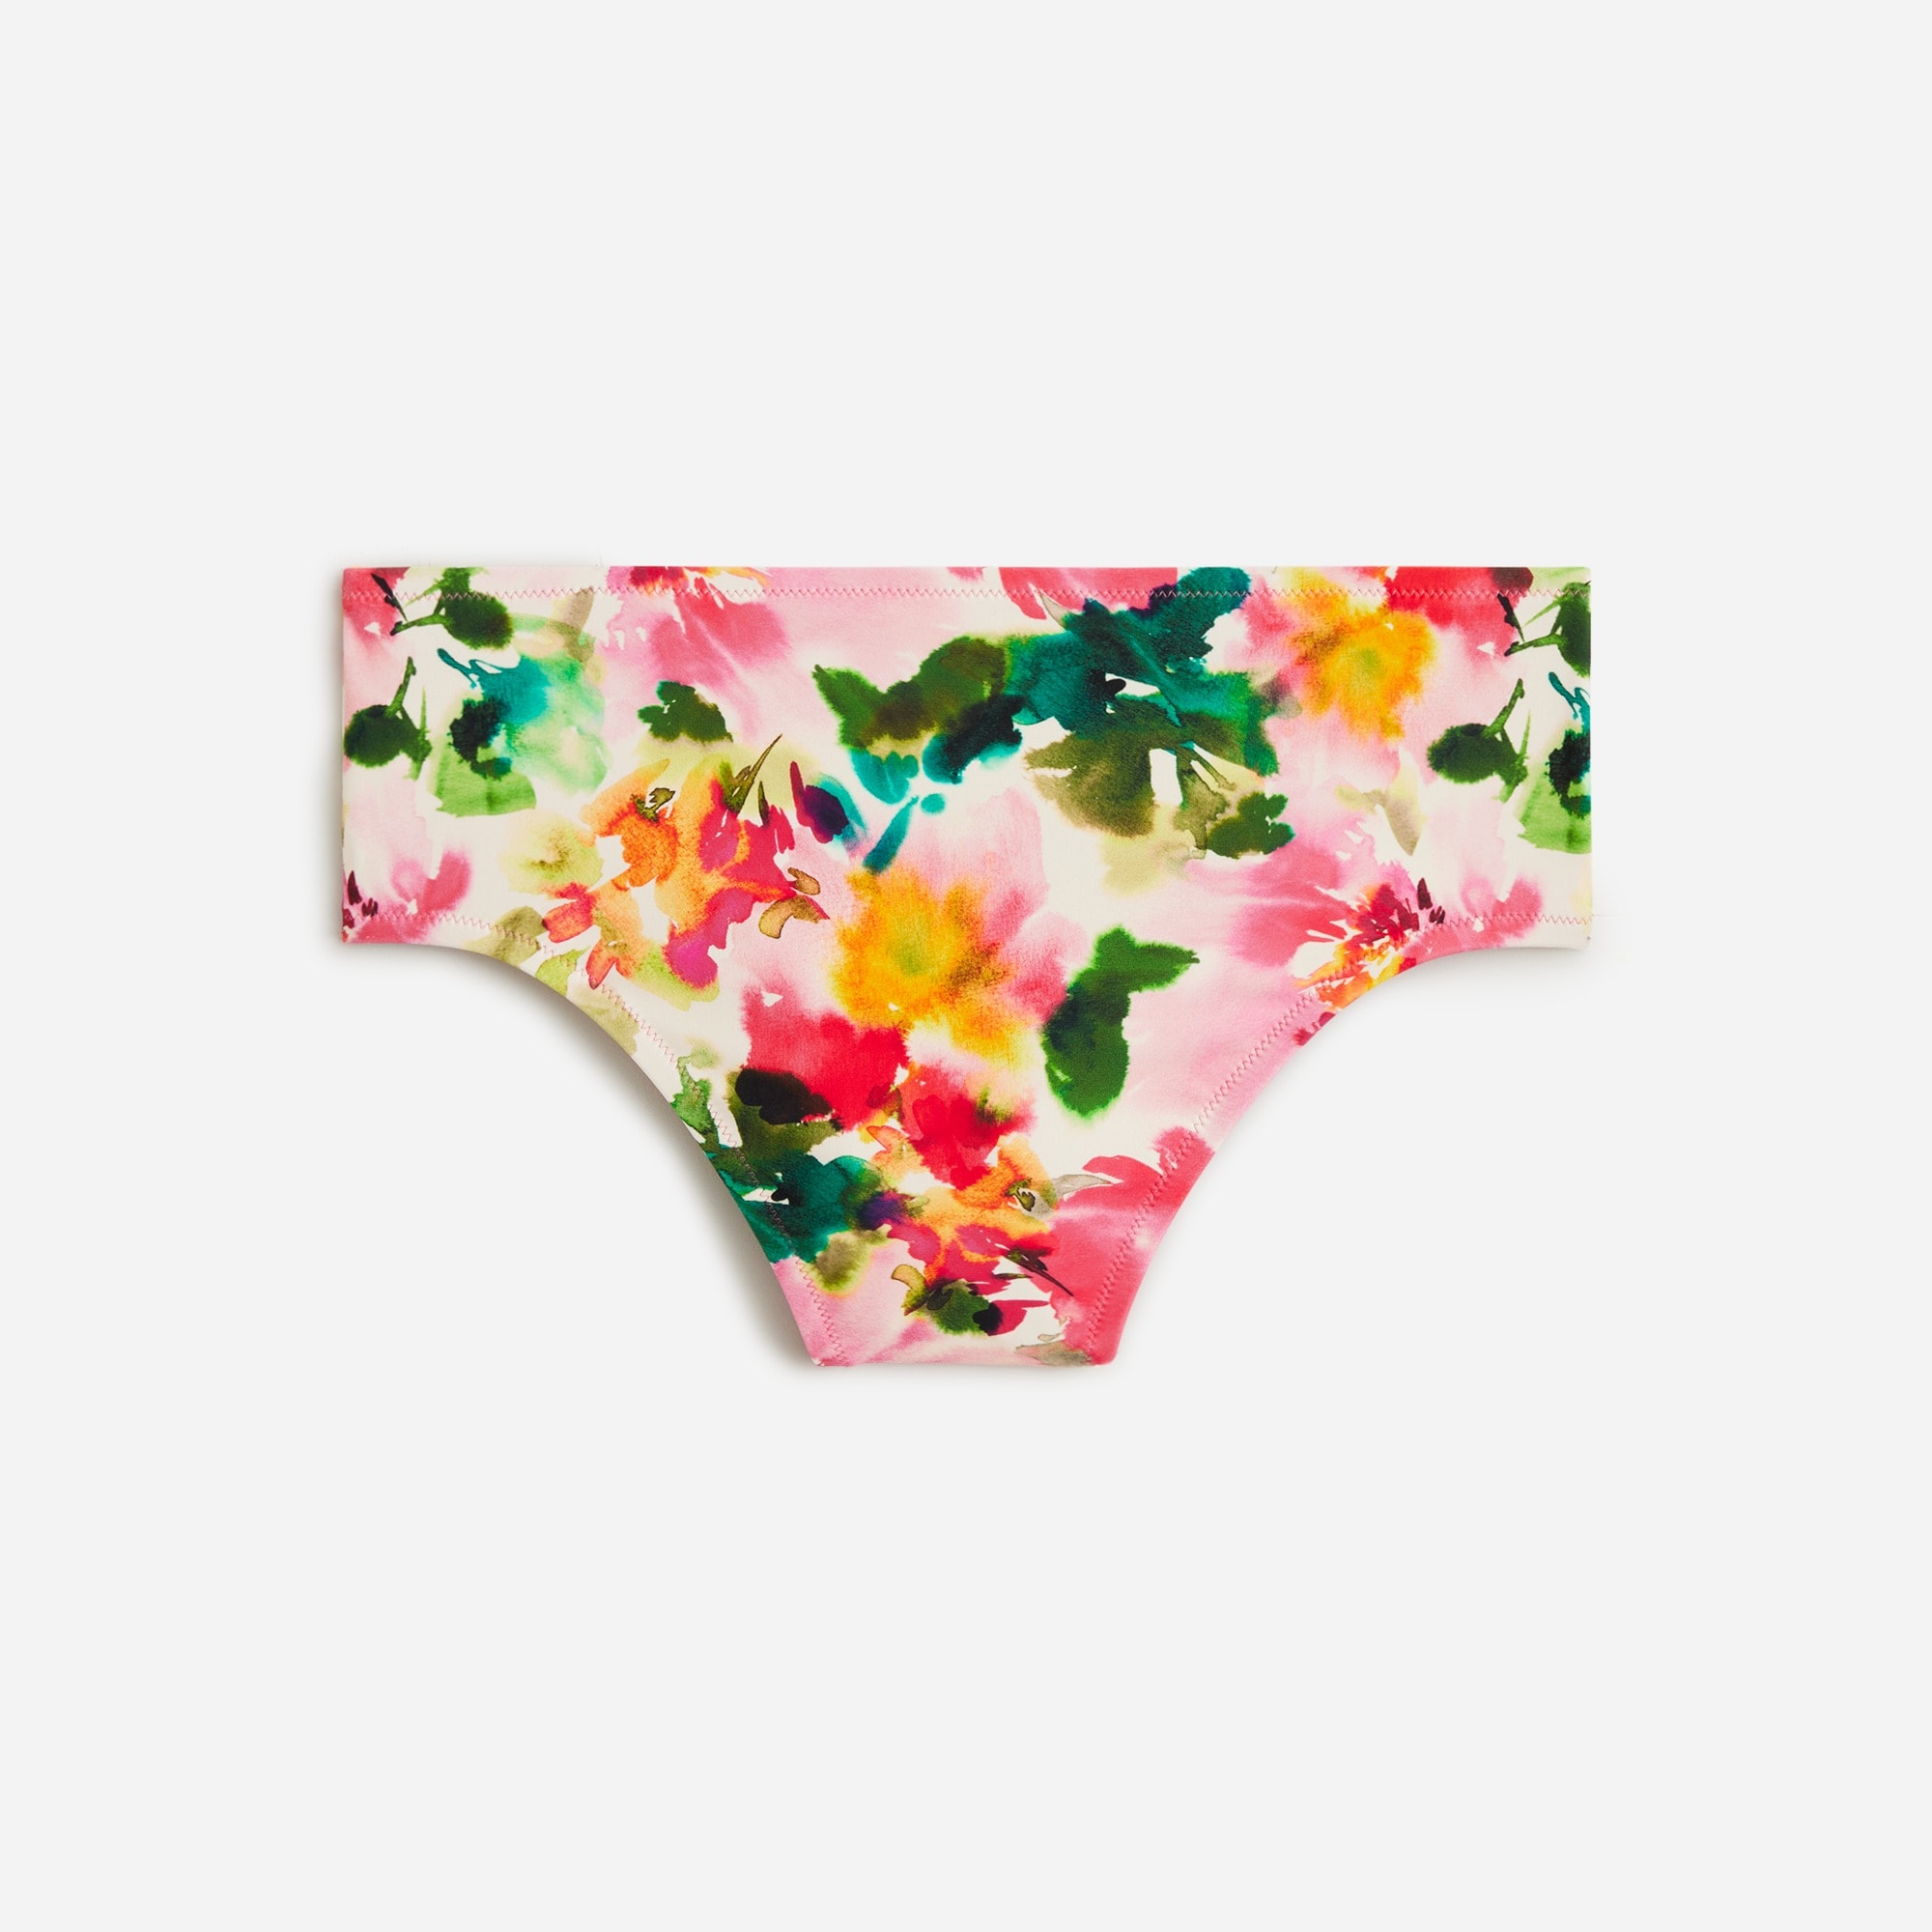  High-rise full-coverage bikini bottom in floral